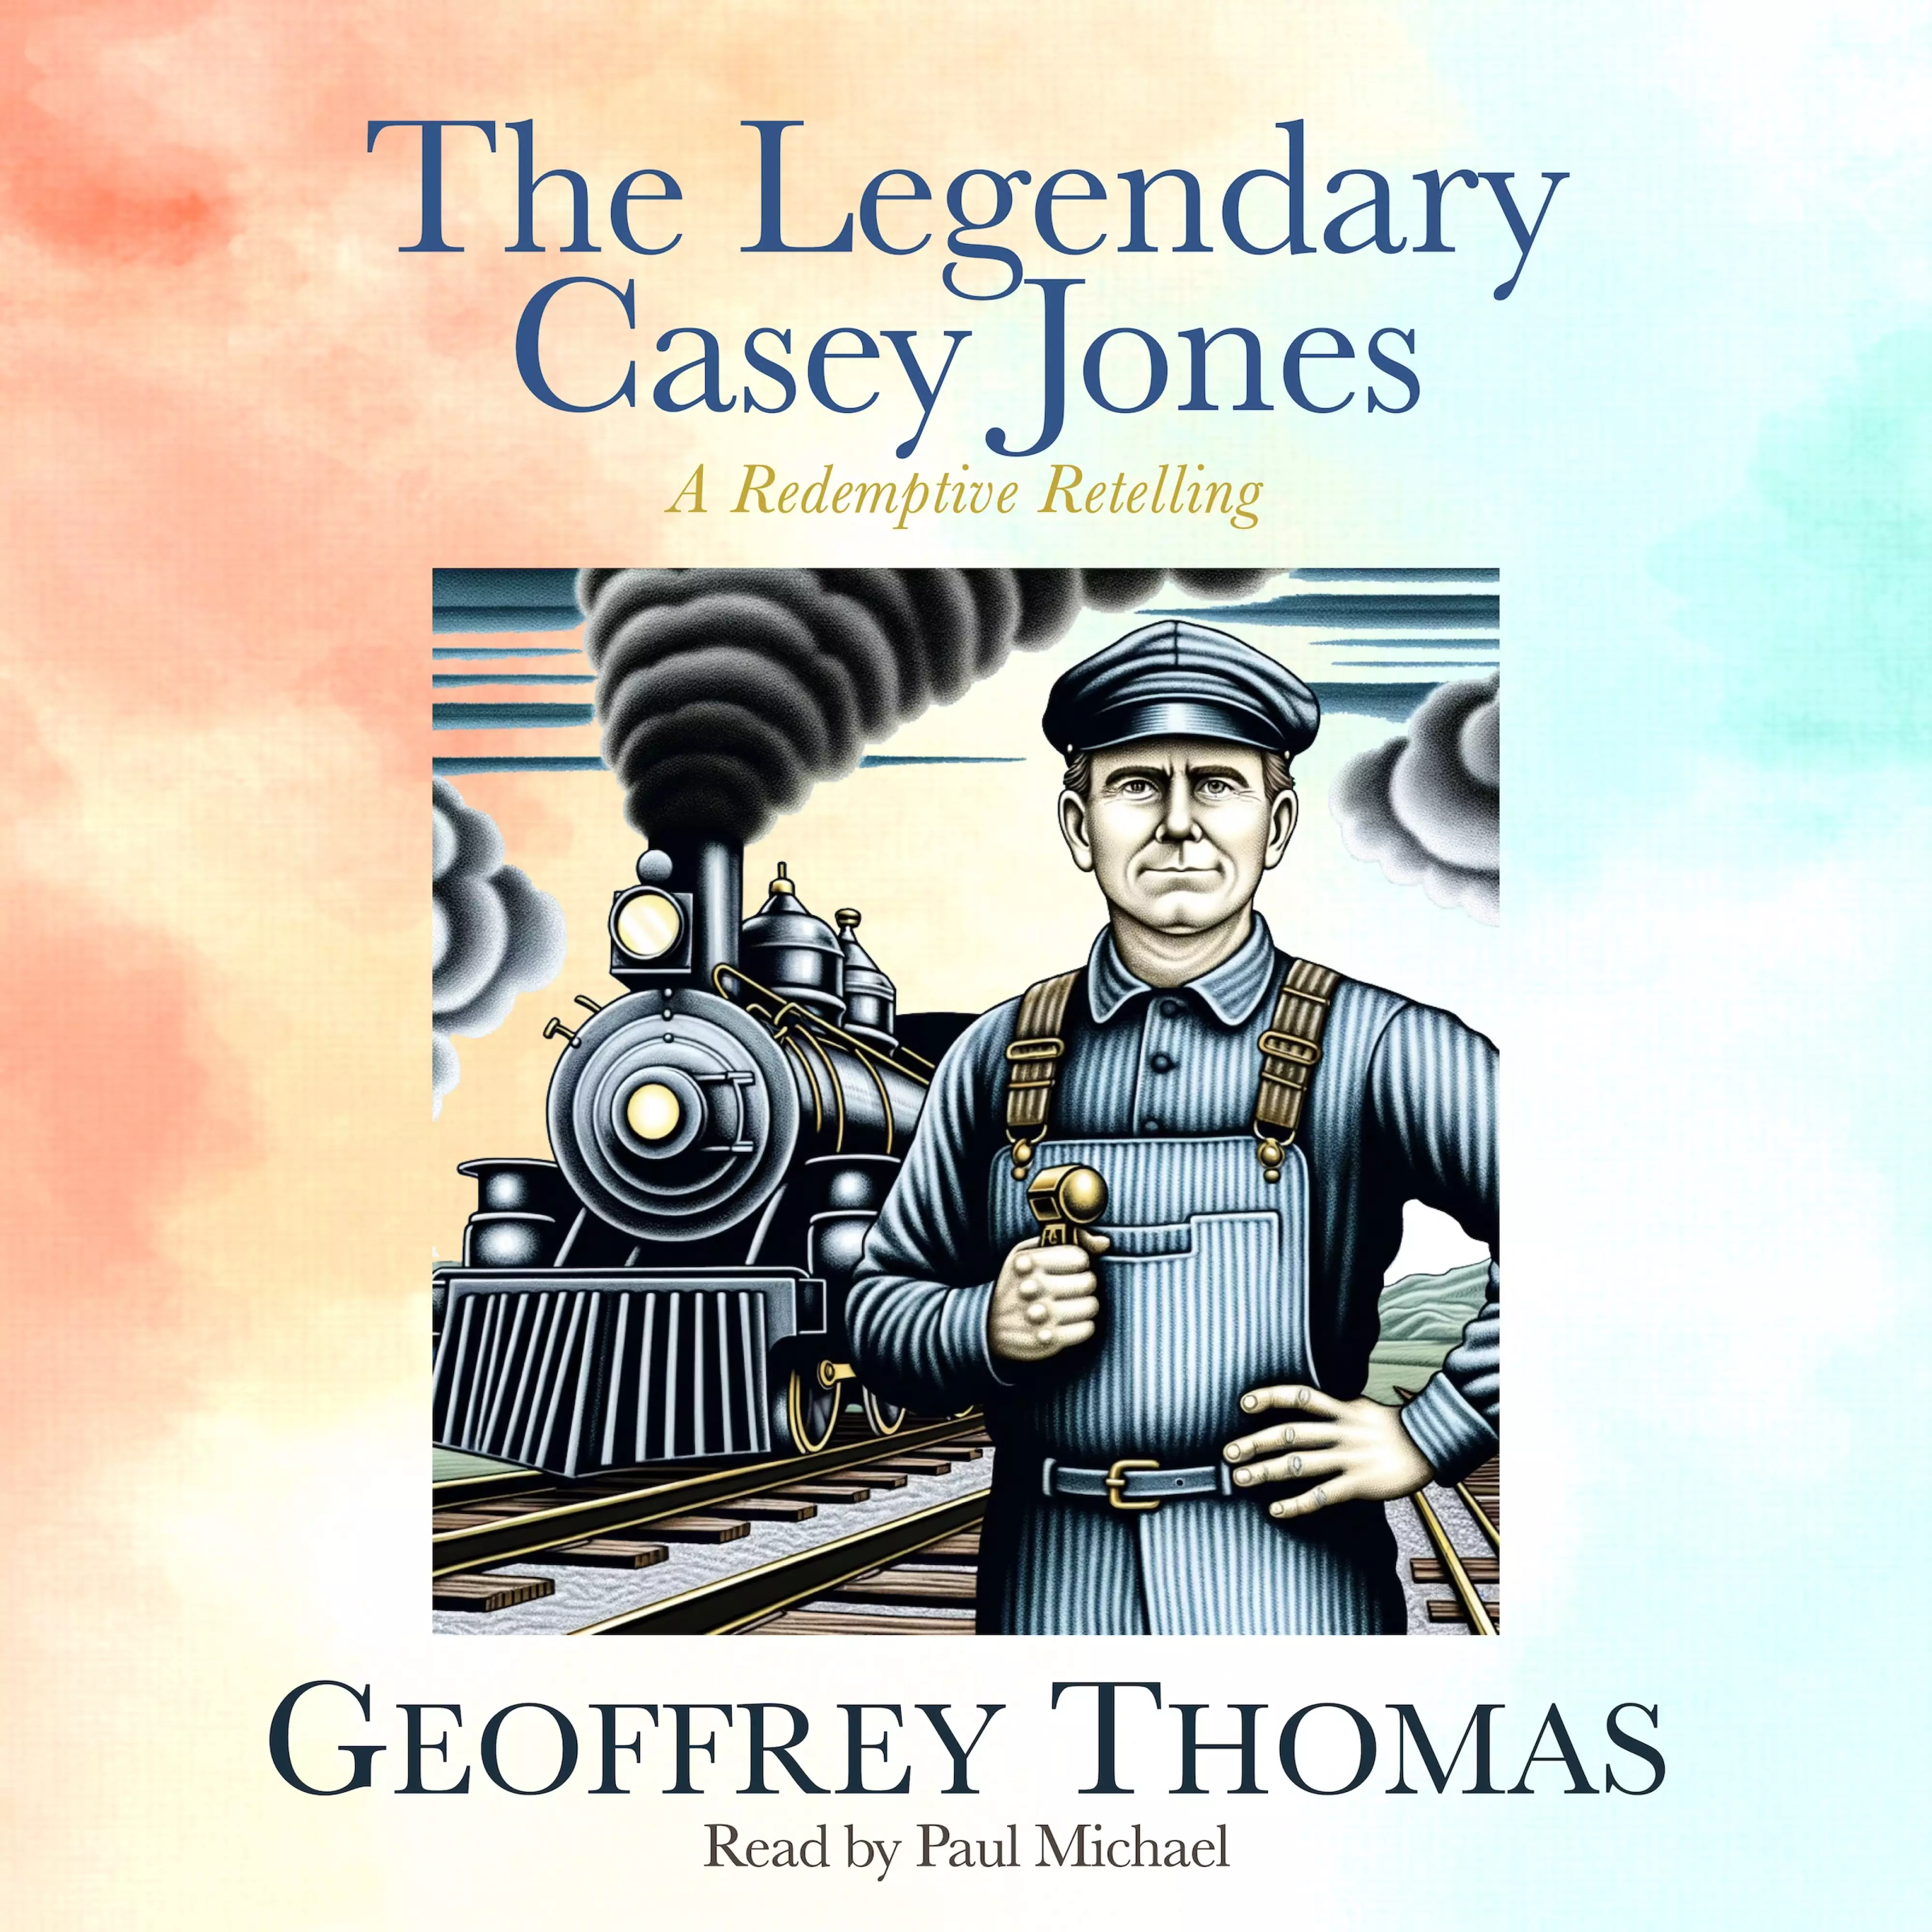 The Legendary Casey Jones